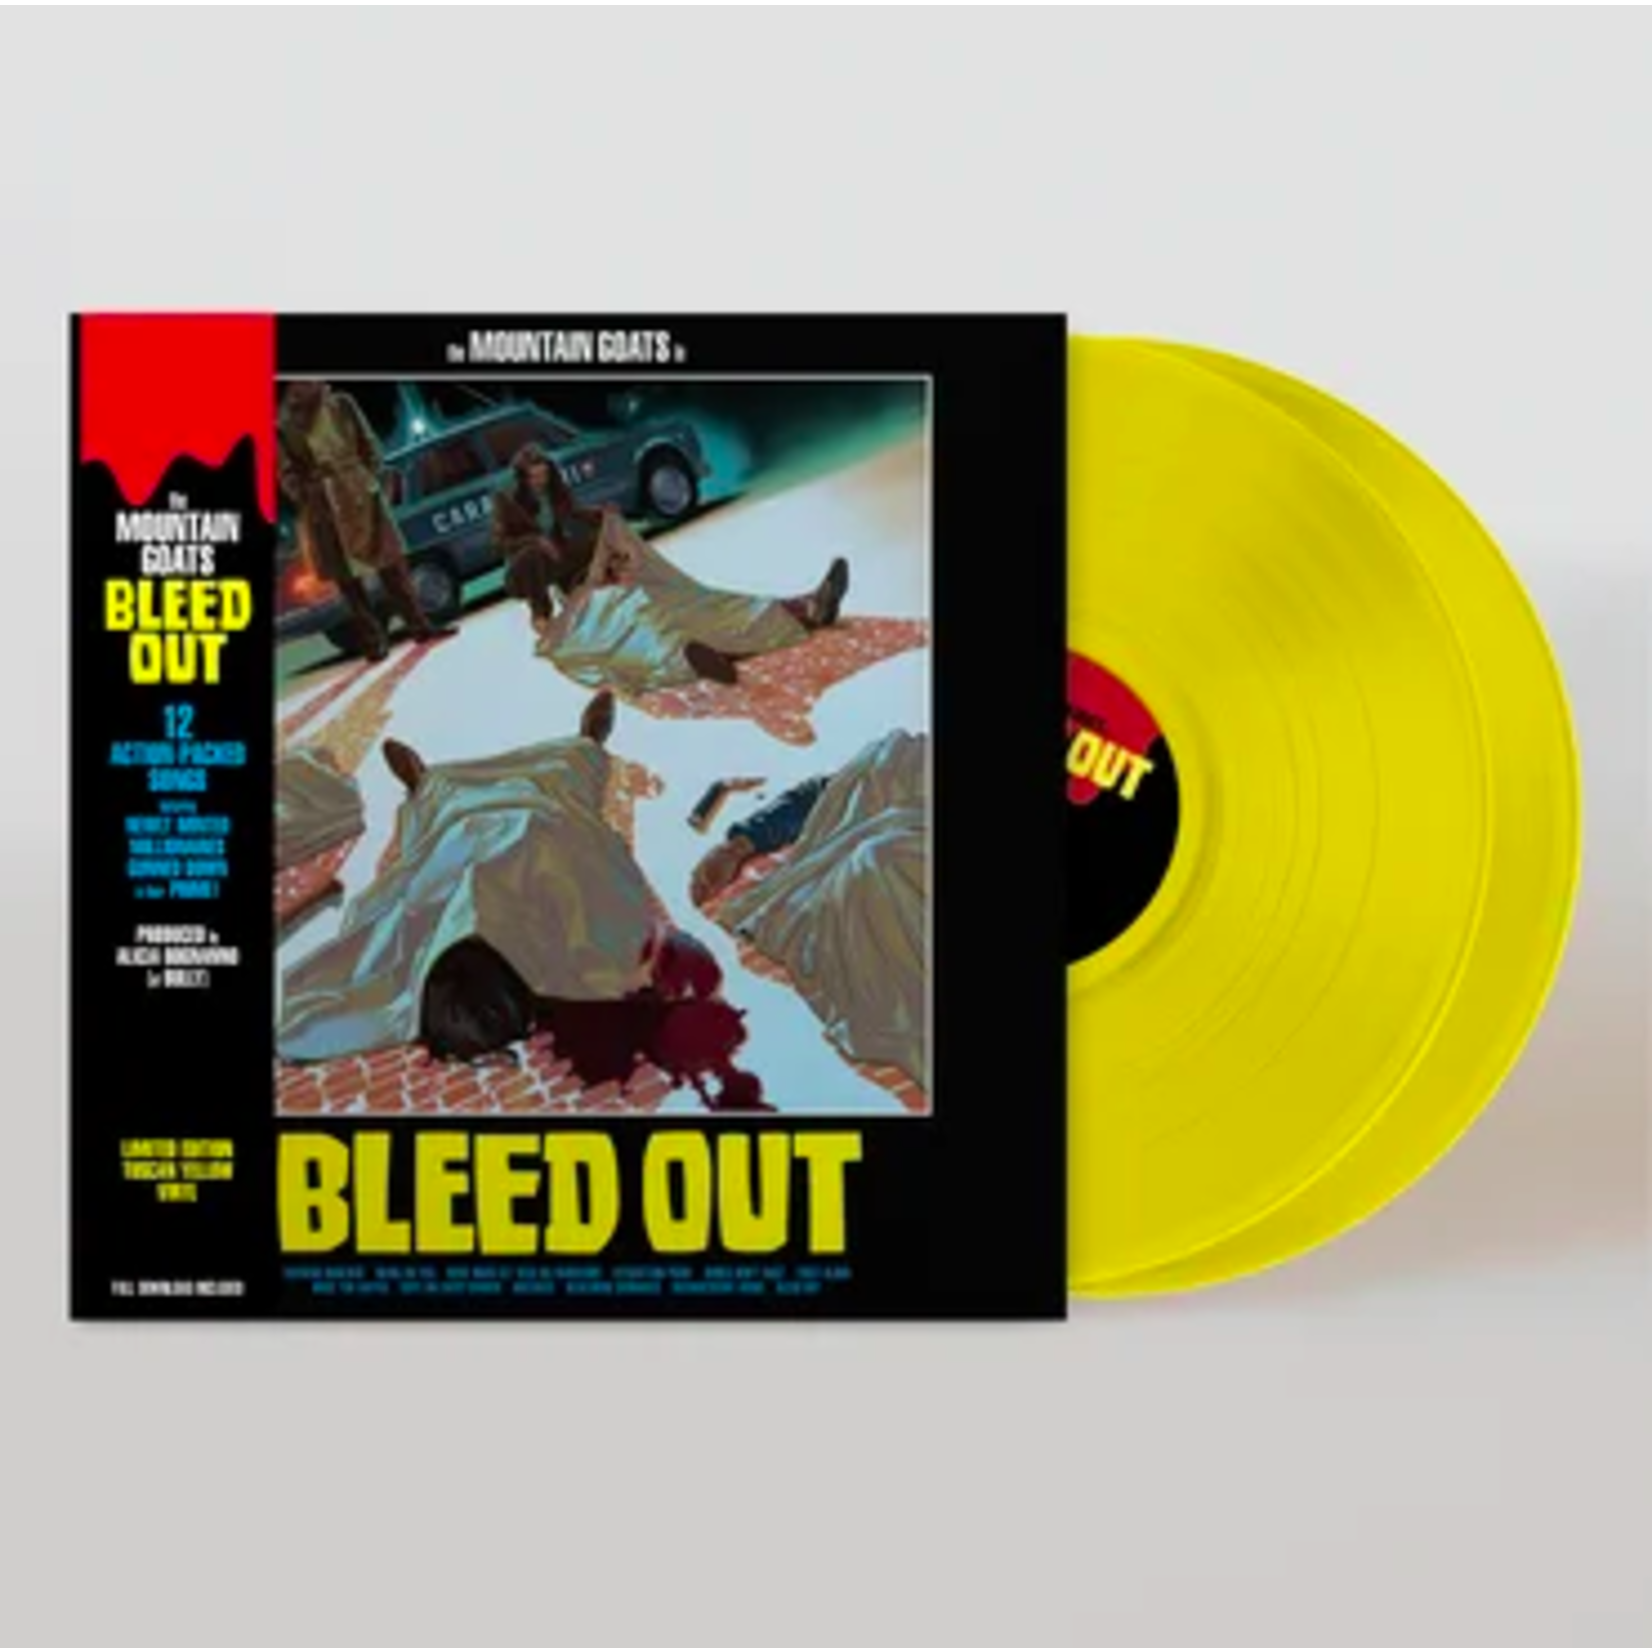 [New] Mountain Goats - Bleed Out (2LP, yellow vinyl w/ OBI strip)